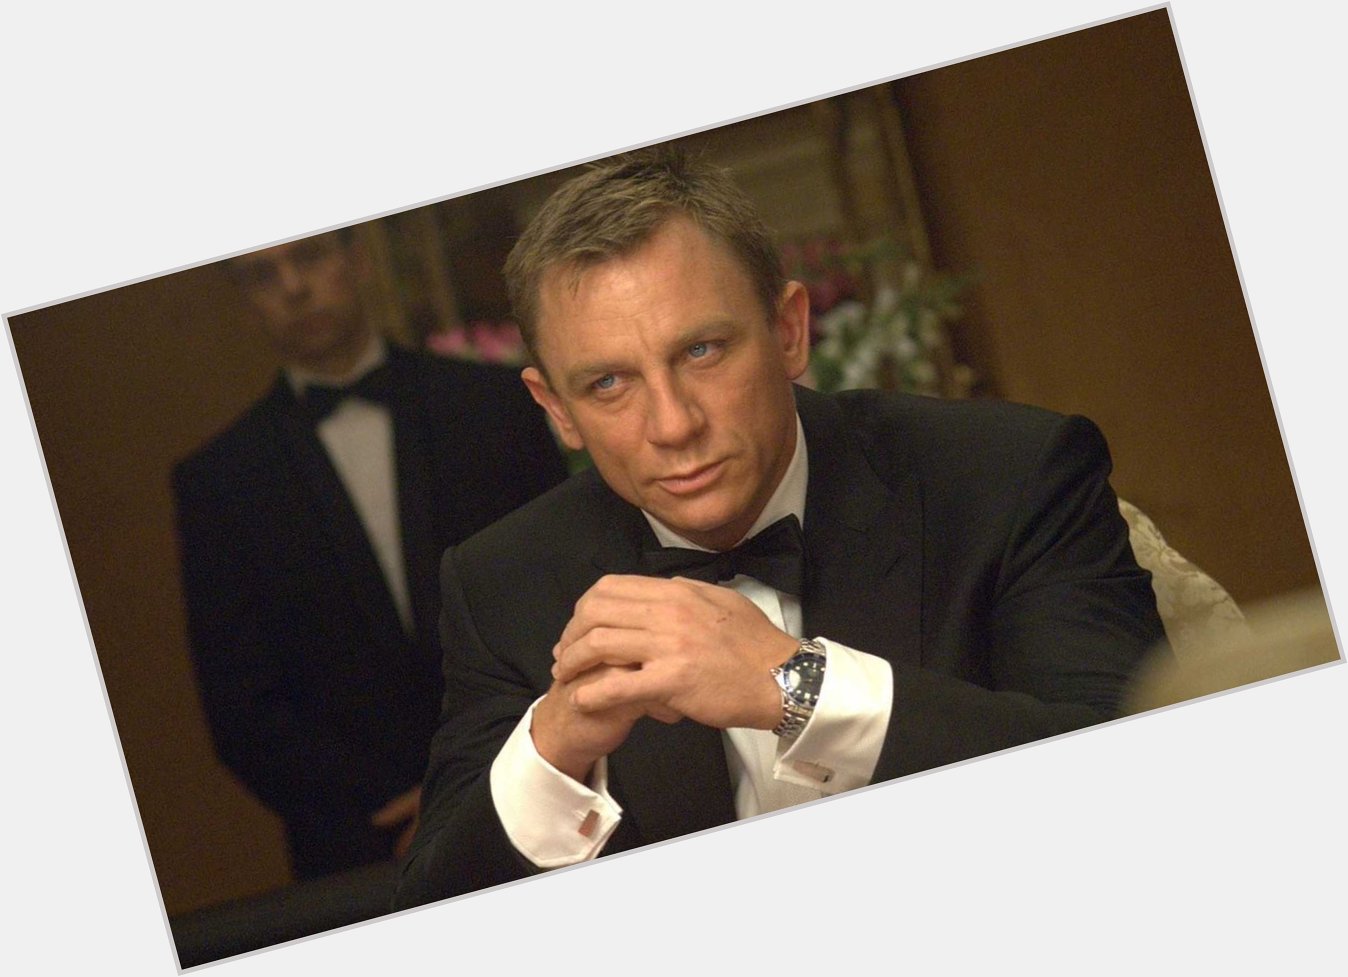 Happy birthday to Daniel Craig! 